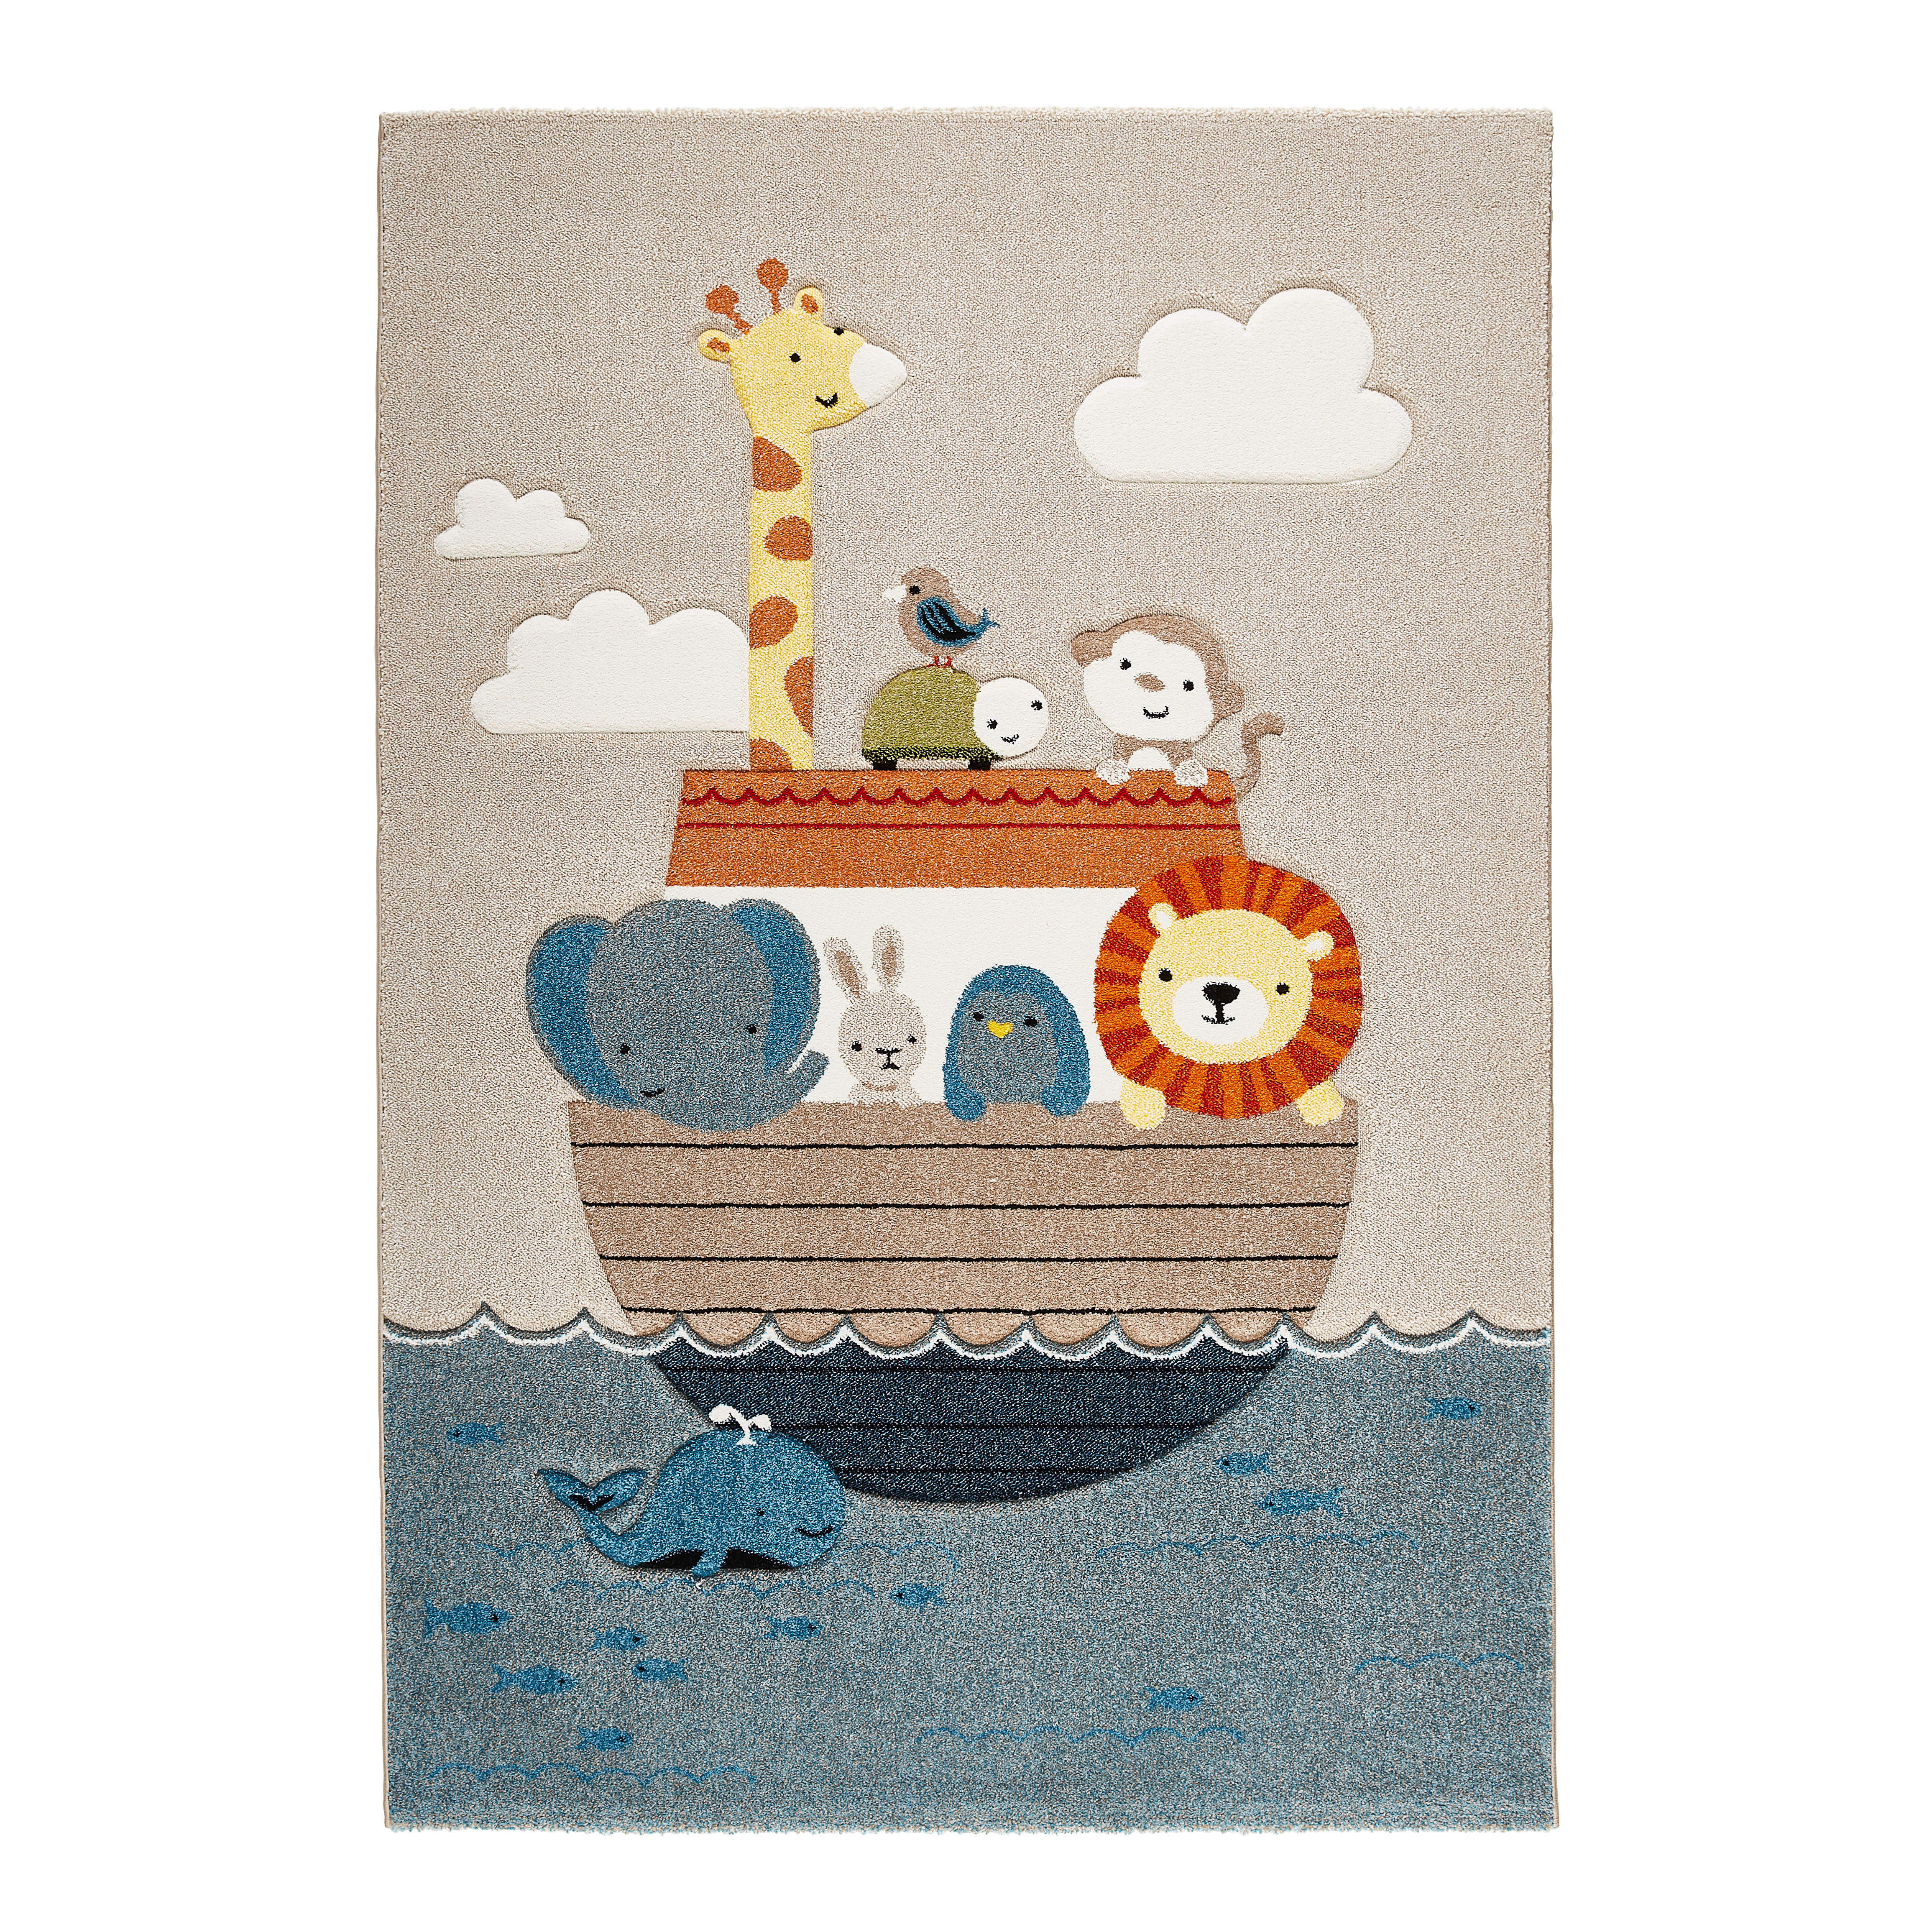 BARNMATTA Arche Noah  - multicolor, Trend, textil (80/150cm) - Ben'n'jen